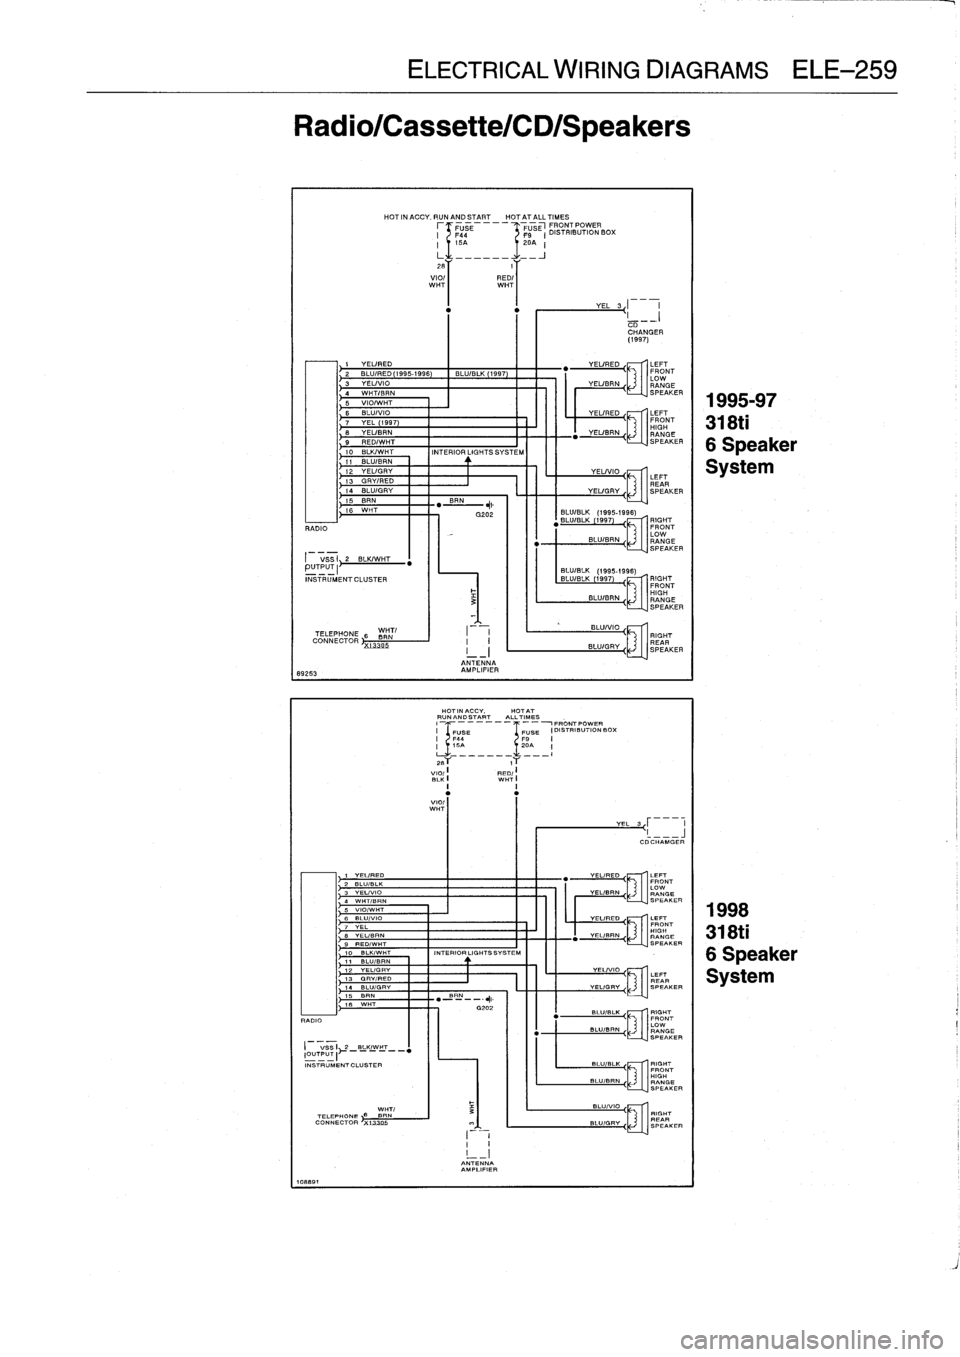 BMW 323i 1993 E36 Workshop Manual 
ELECTRICAL
WIRING
DIAGRAMS
ELE-259

Radio/Cassette/CD/Speakers

RADIO

I
VSSI
2
BLK/WHT
pUTPUTI~~
INSTRUMENT
CLUSTER

89253
RADIO

I

	

V
SS
I
r
2
-
B-K-W-7
~
1=UUTPU-I
INSTRUMENTCLUSTER

1-891

1
0